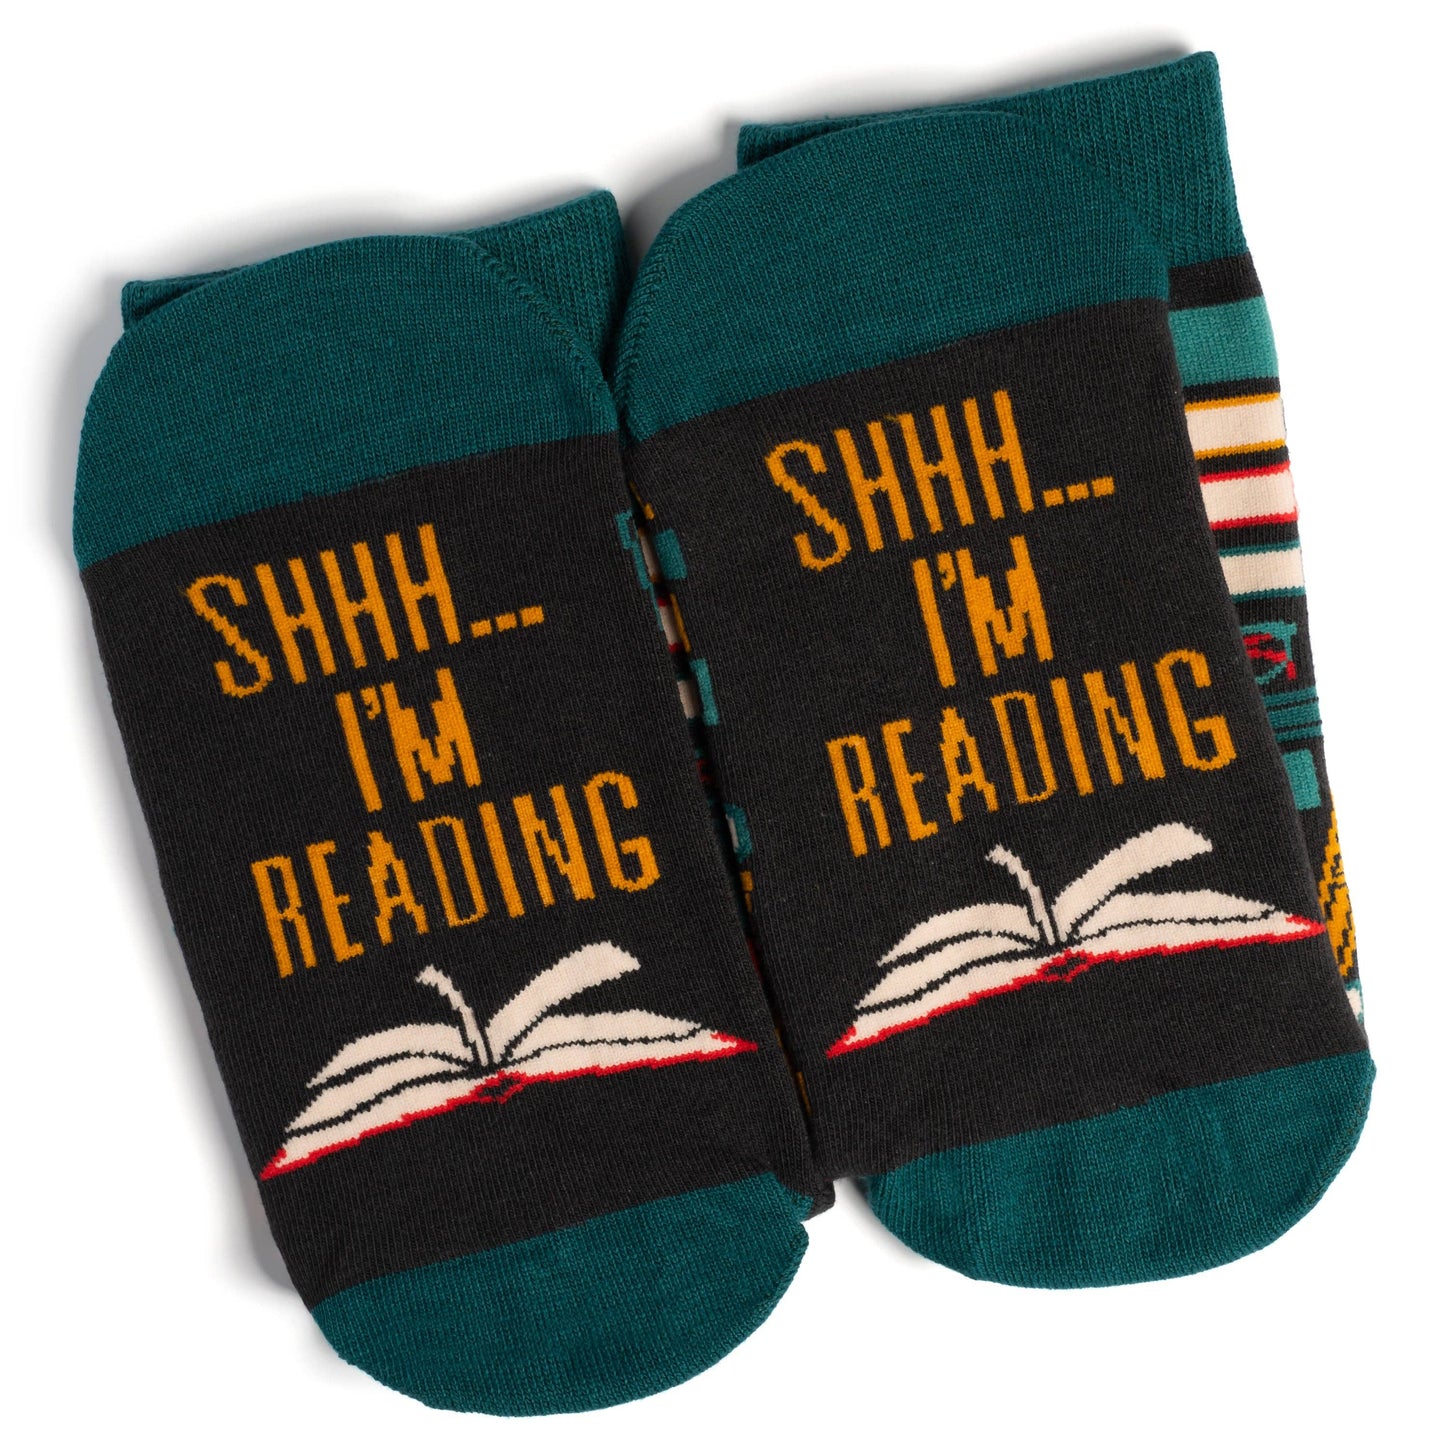 Lavley - Shhh I'm Reading Socks